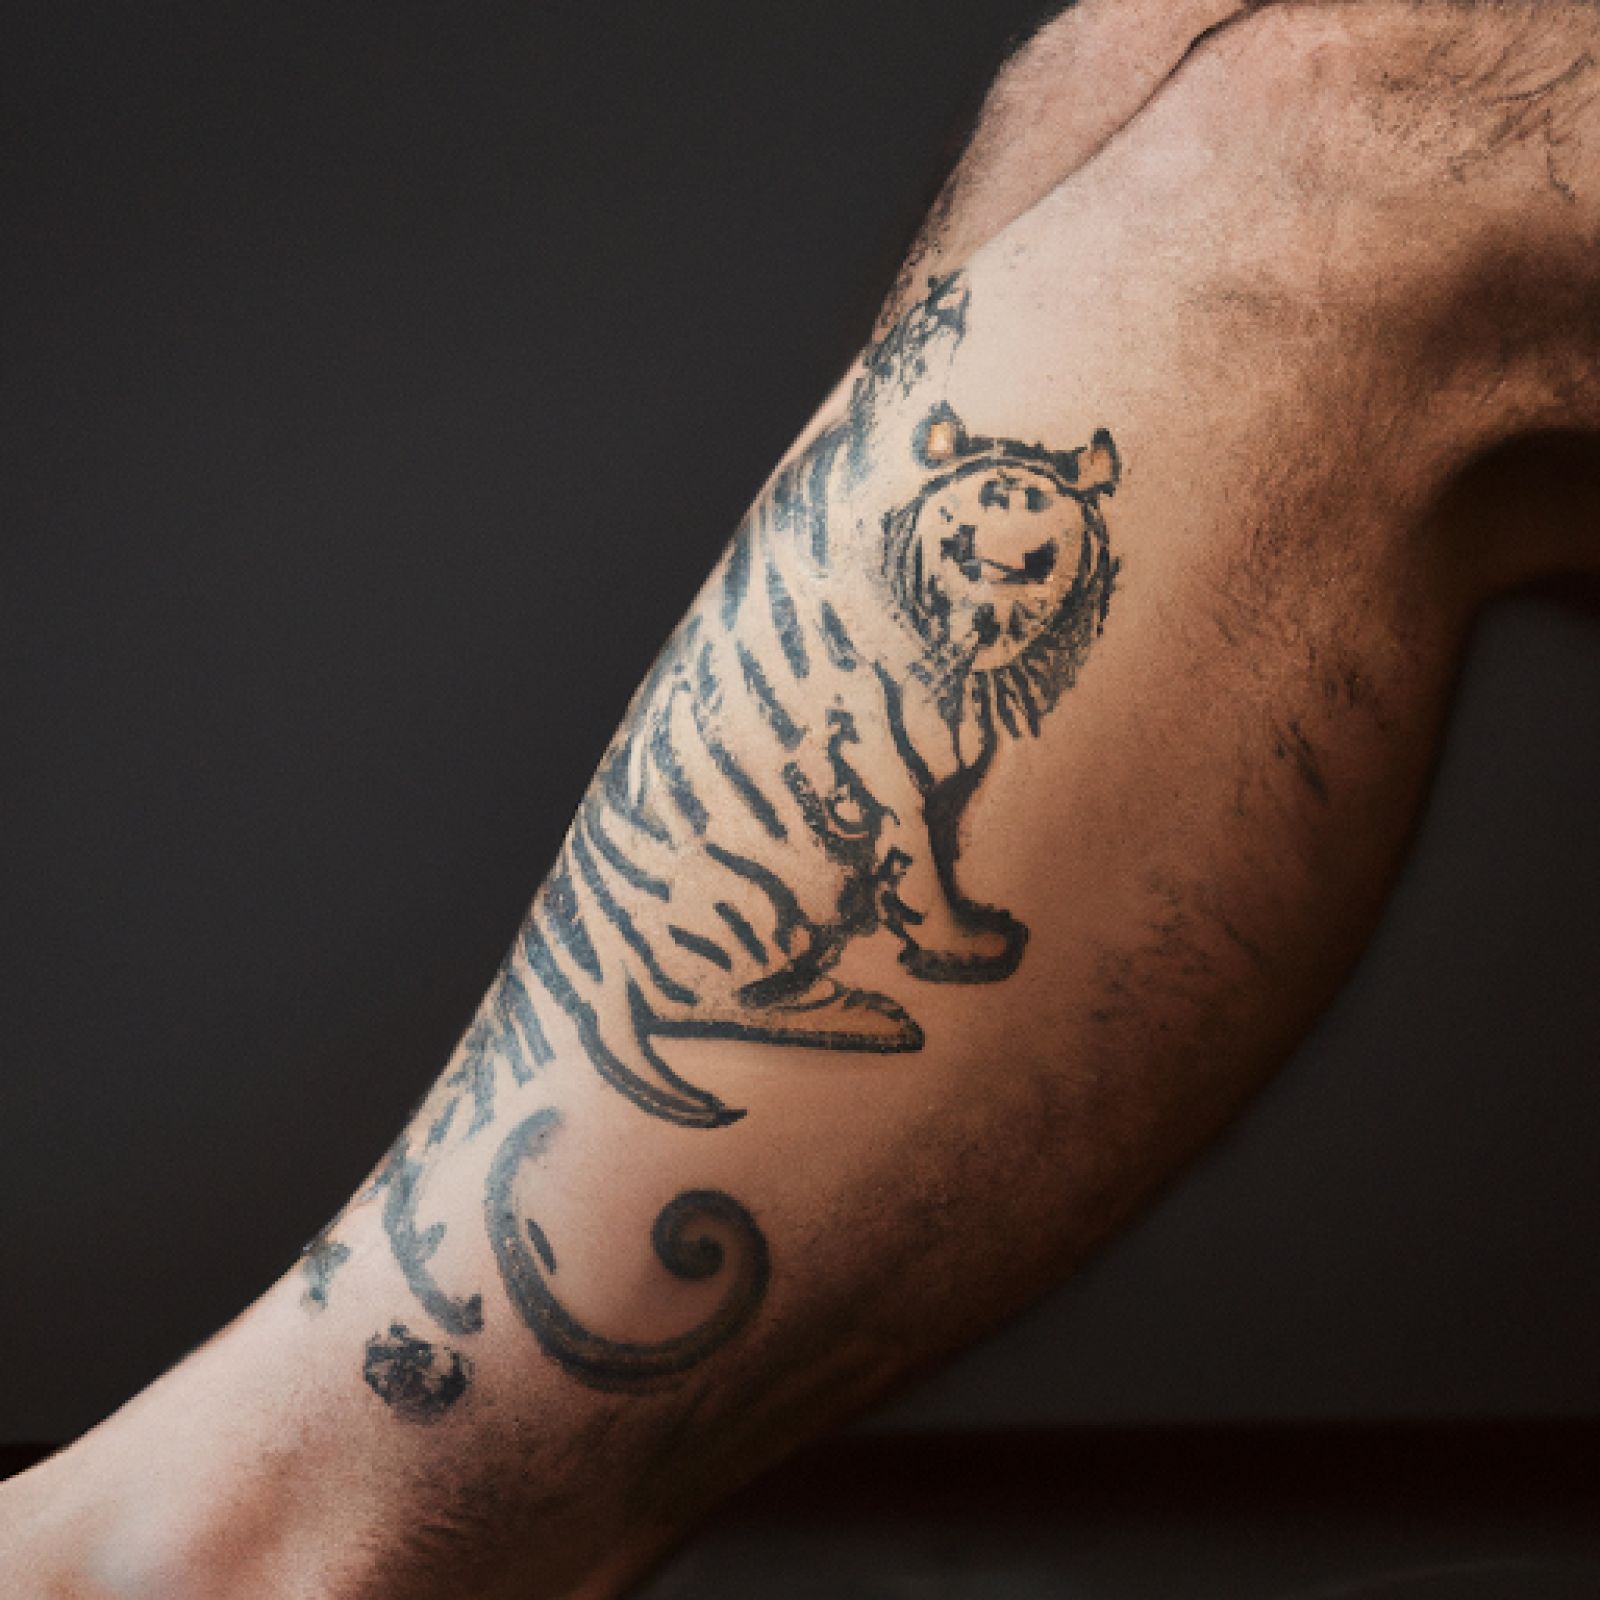 Tiger tattoo on knee for men